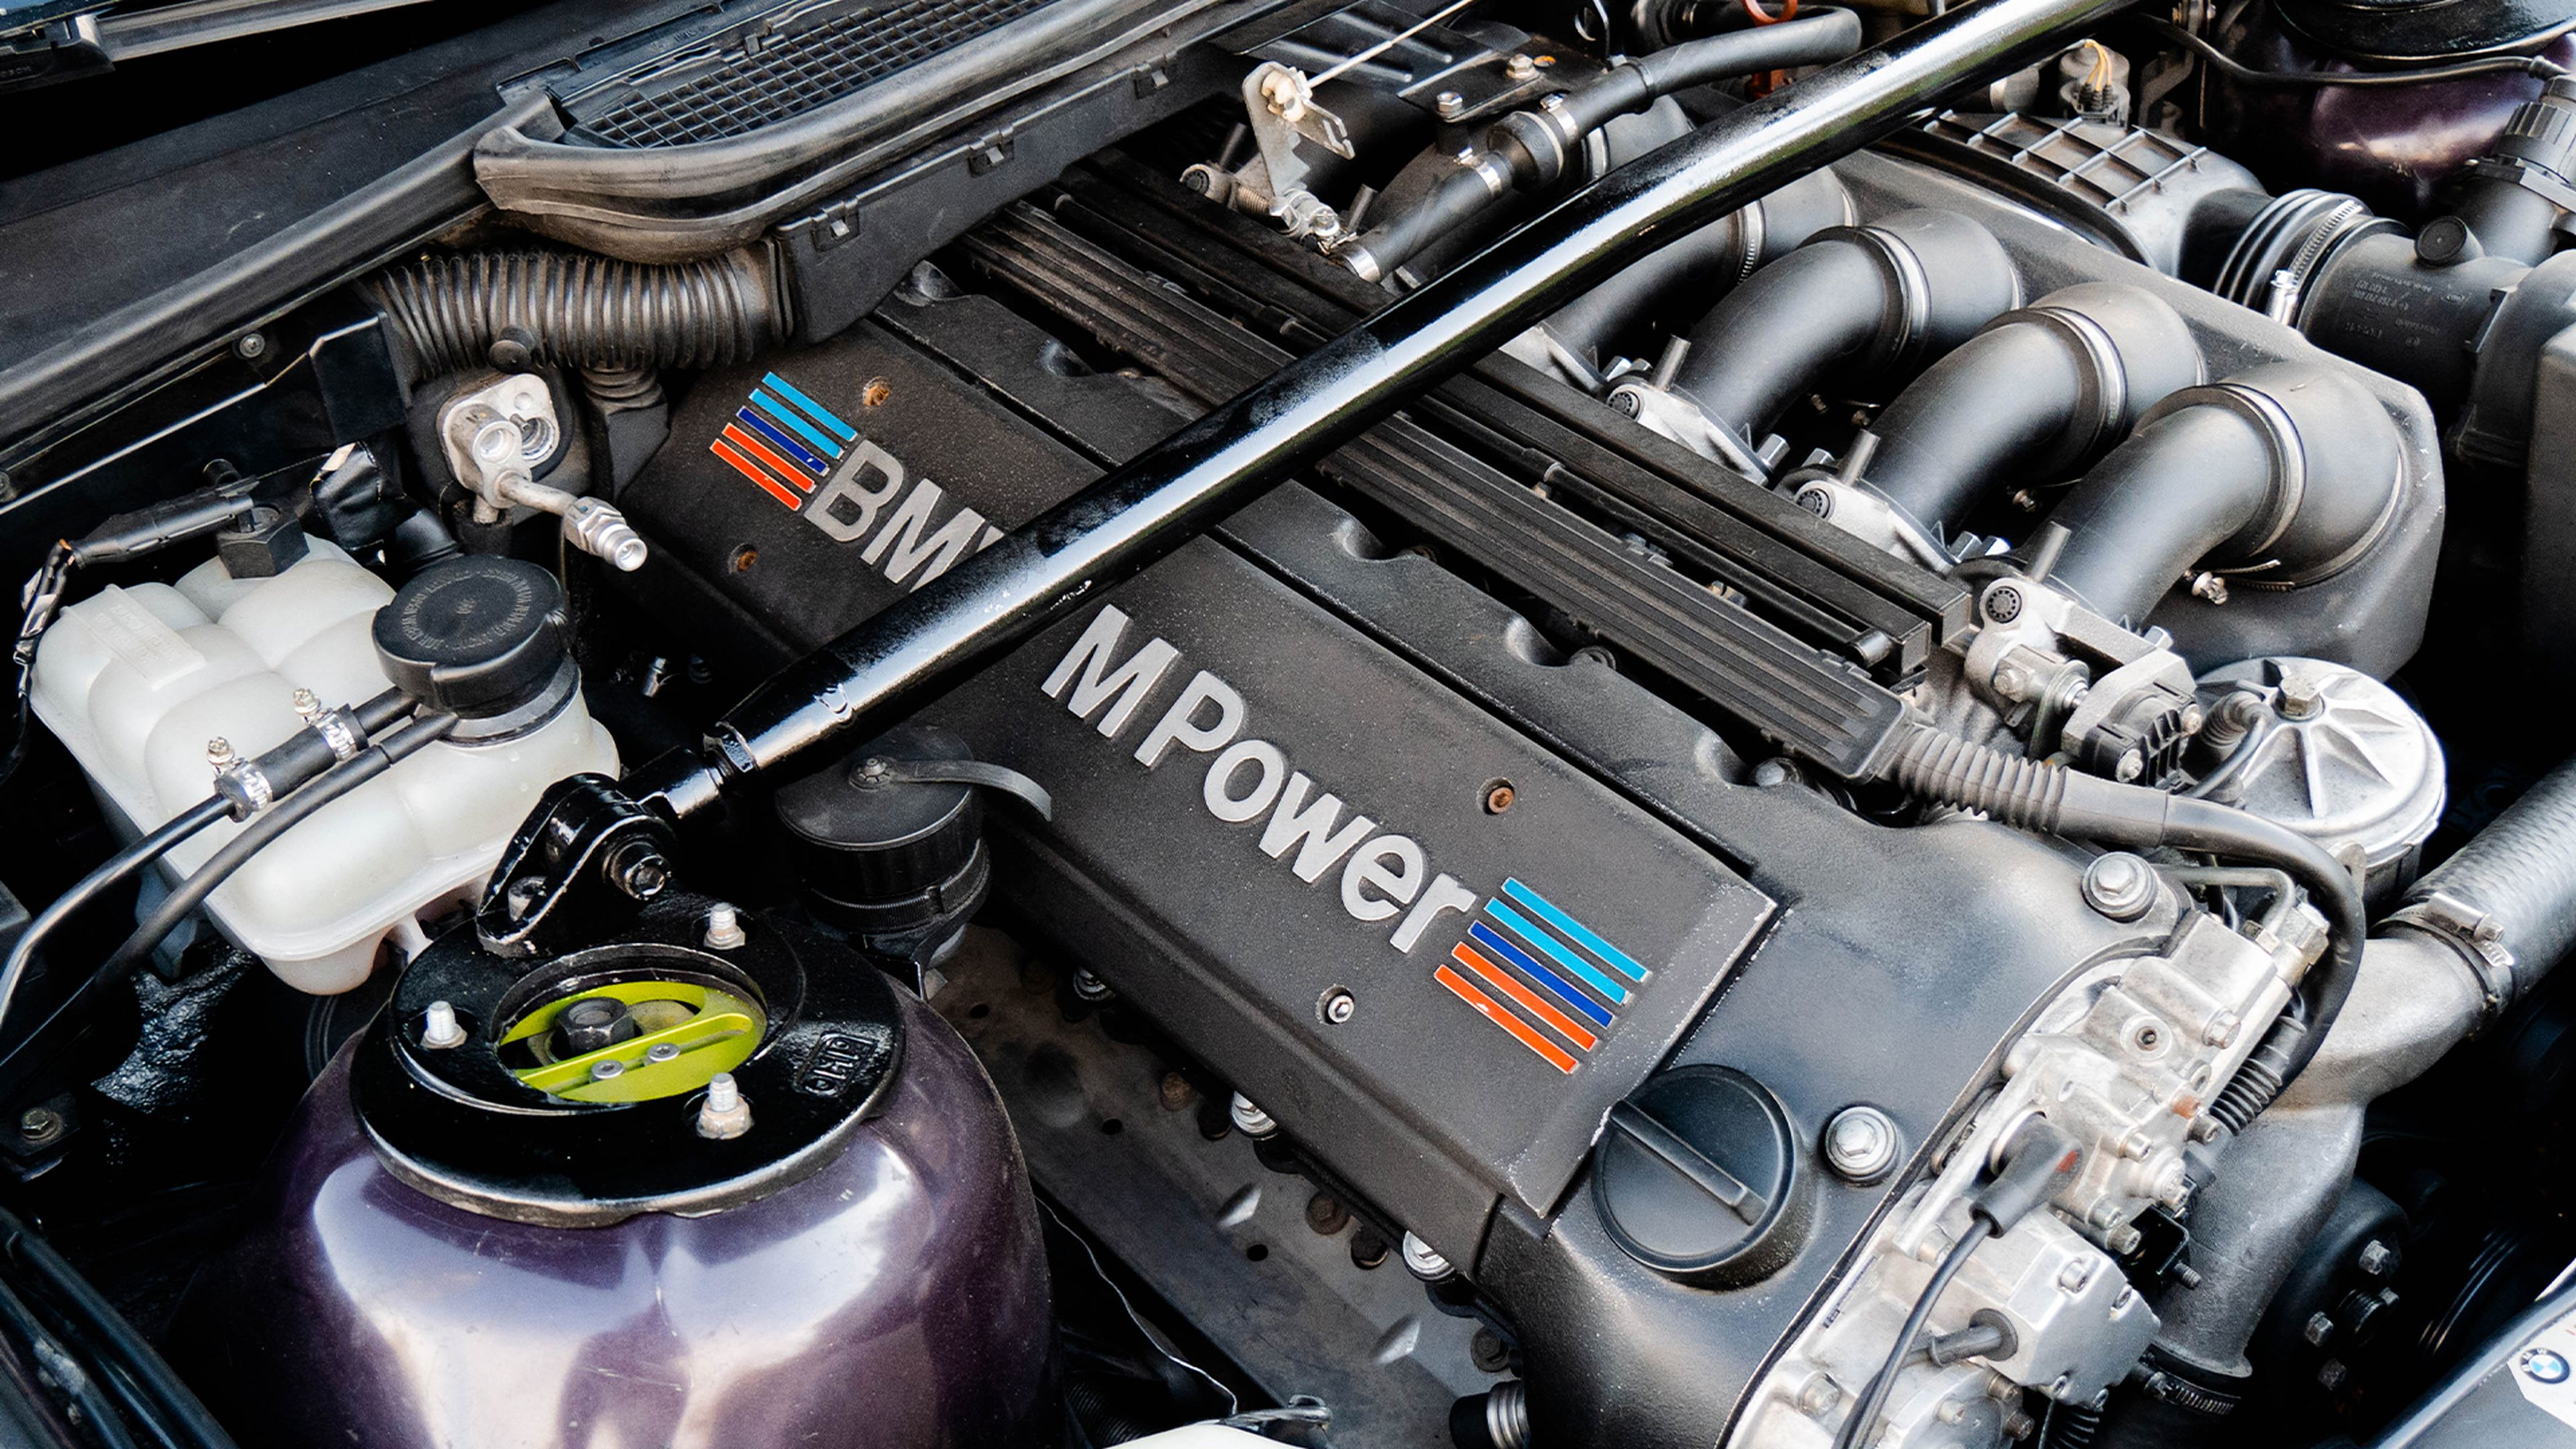 Motor de 6 cilindros en línea de BMW M3 E36.